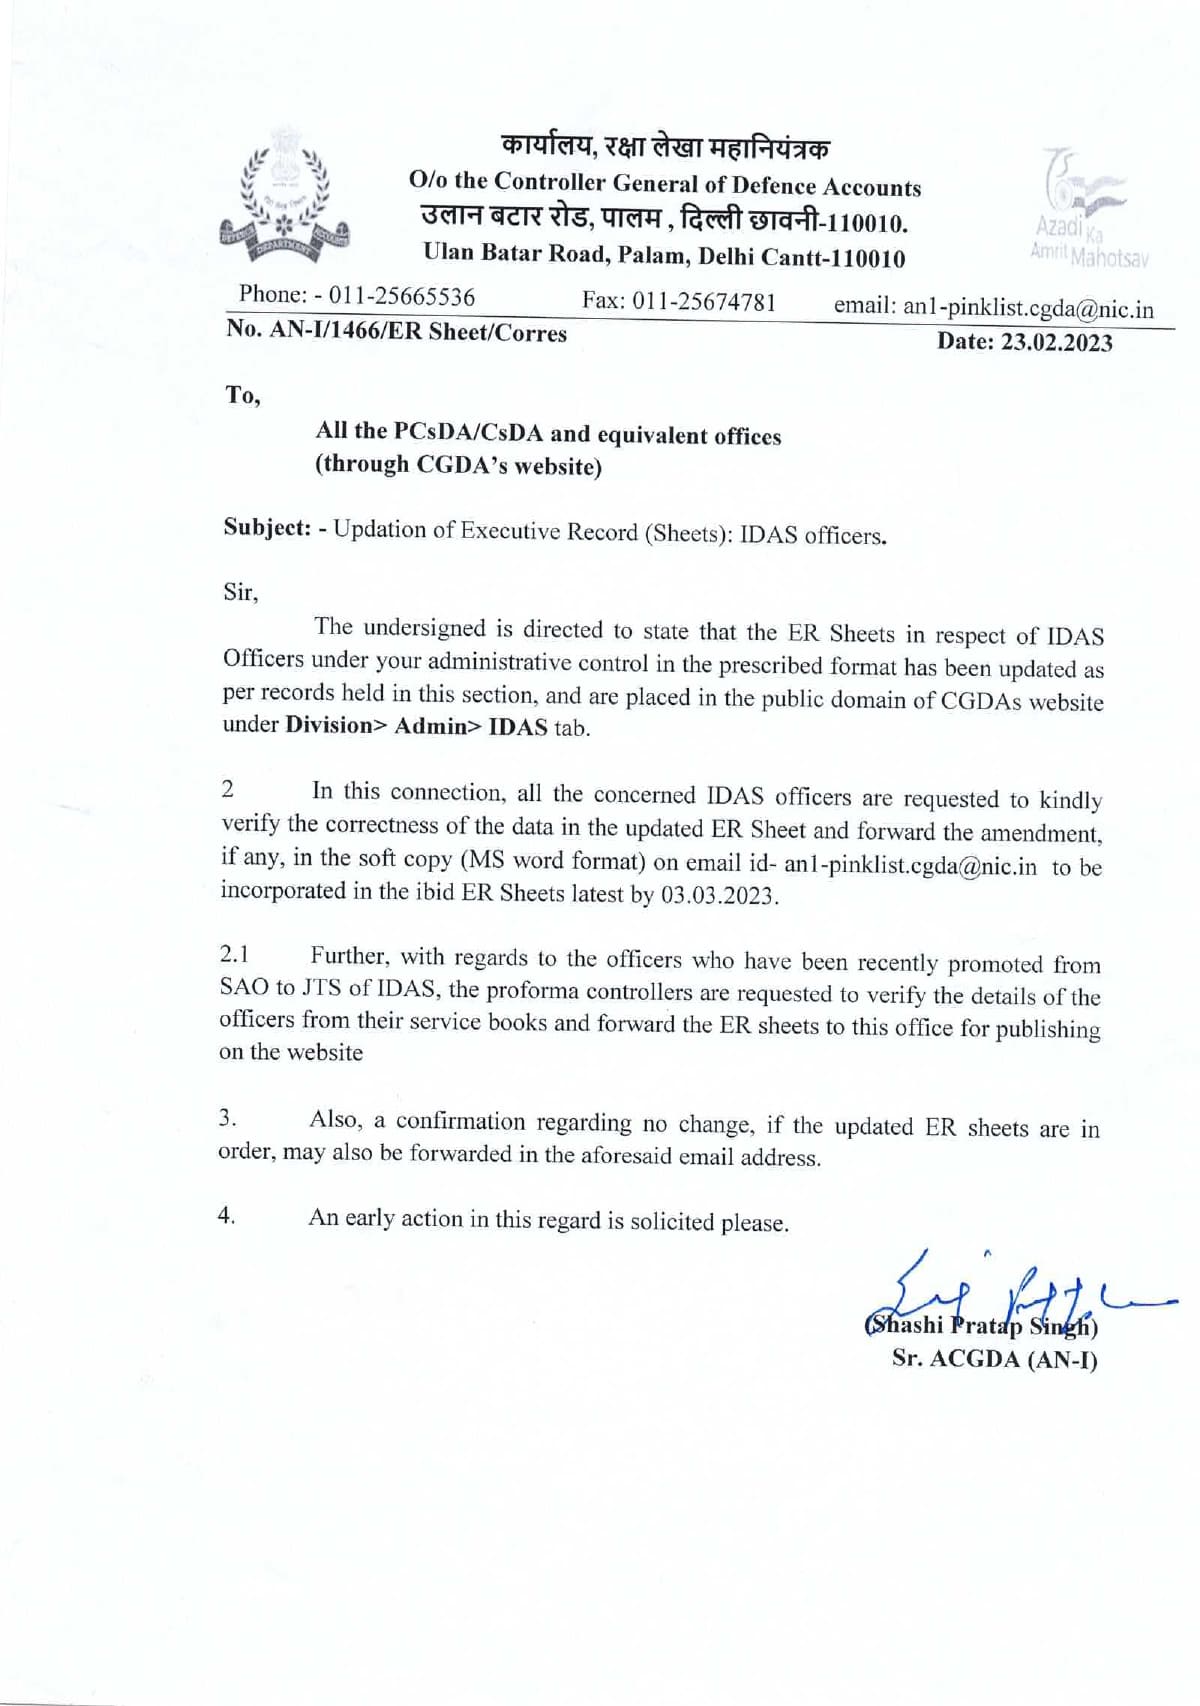 Updation of Executive Record (Sheets): IDAS officers – CGDA order